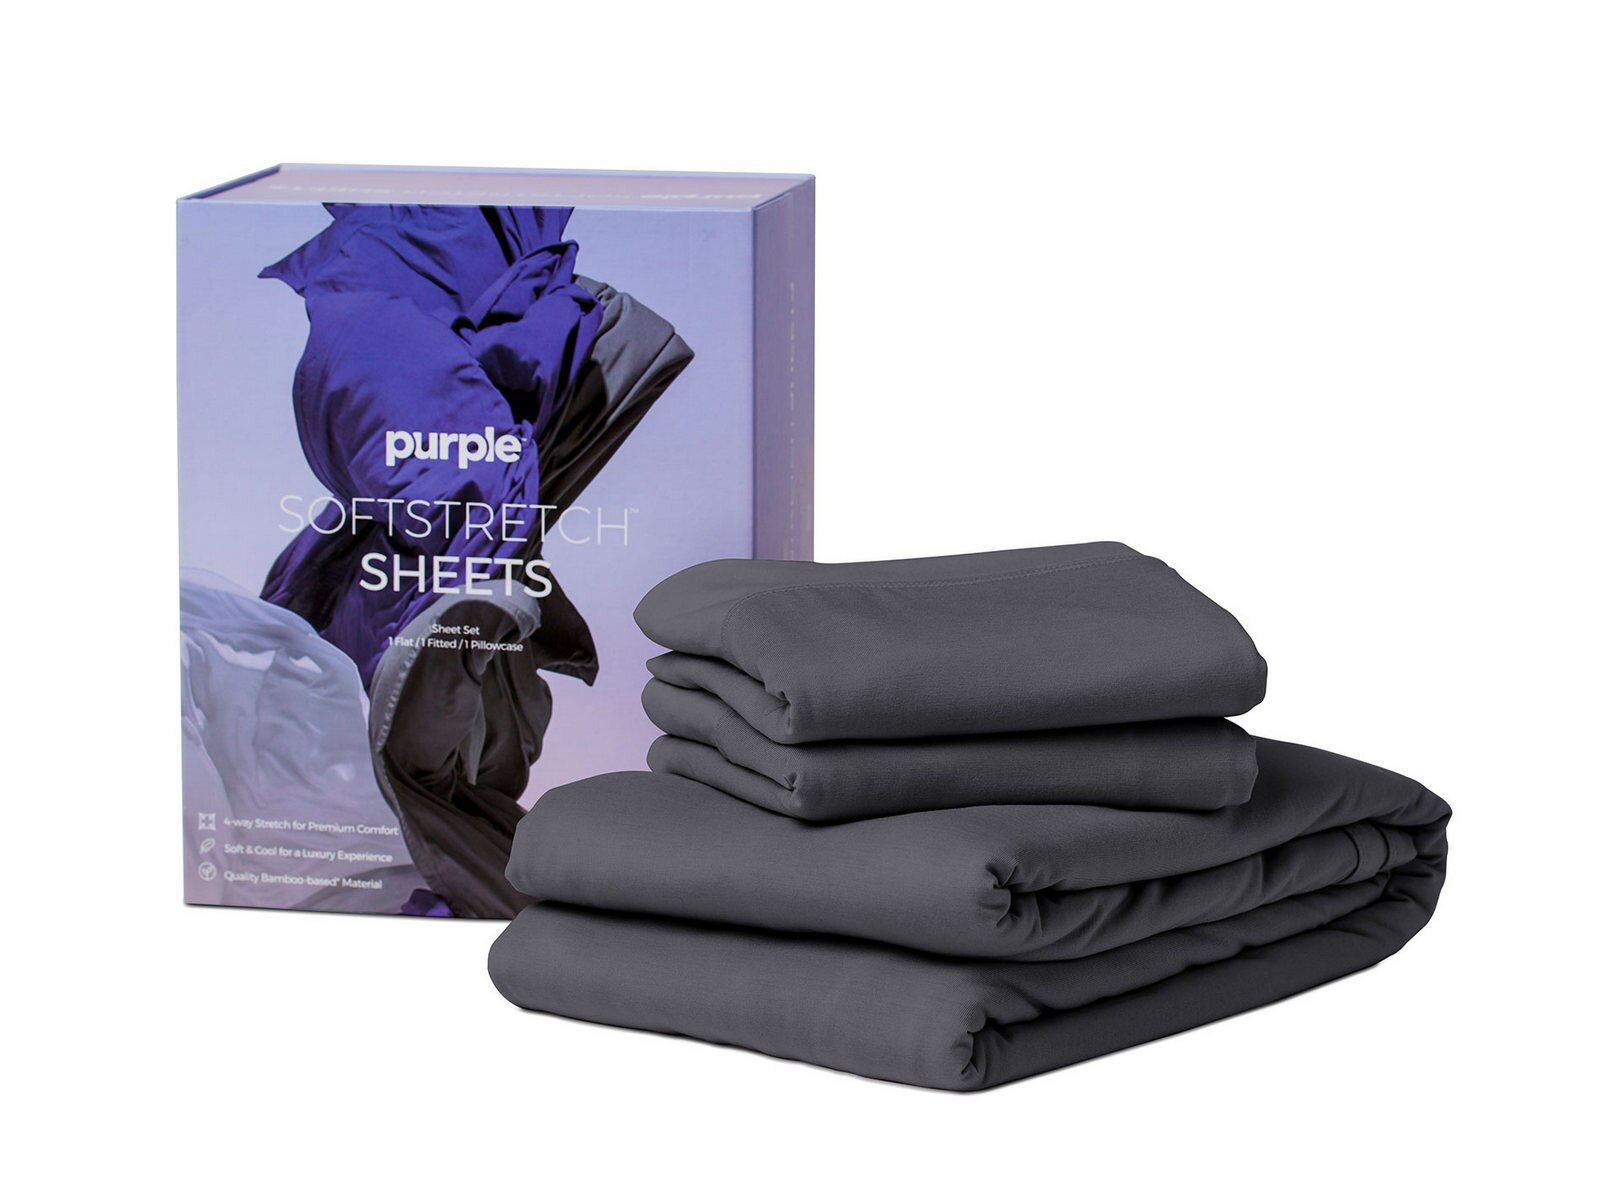  Purple SoftStretch Sheets, Full, Bamboo Sheets,  Moisture-Wicking, Deep Purple : Home & Kitchen